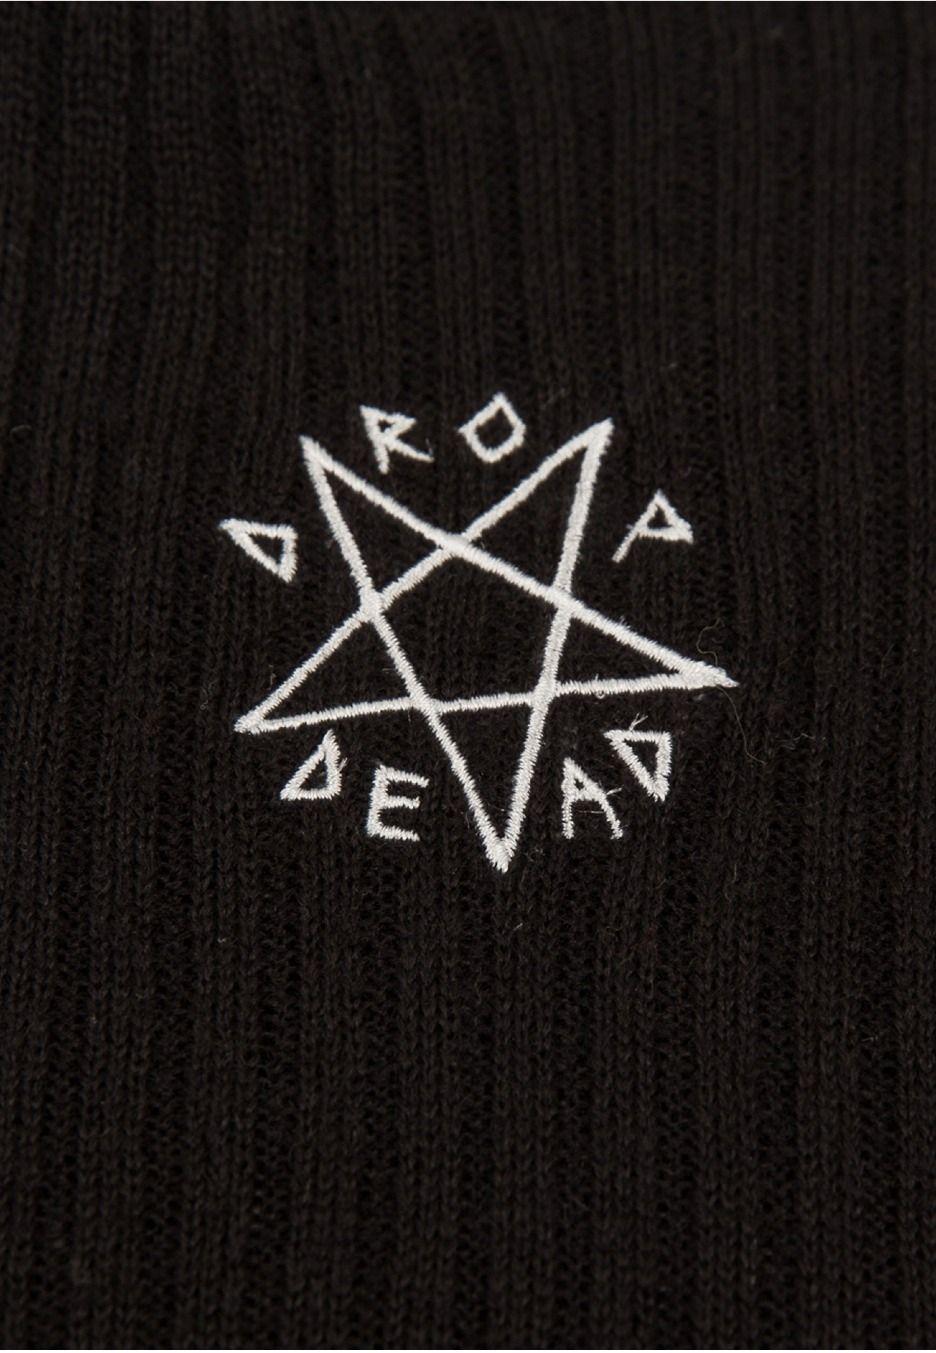 Drop Dead Logo - Drop Dead - The Mark Crop Top - Pullover - Impericon.com Worldwide